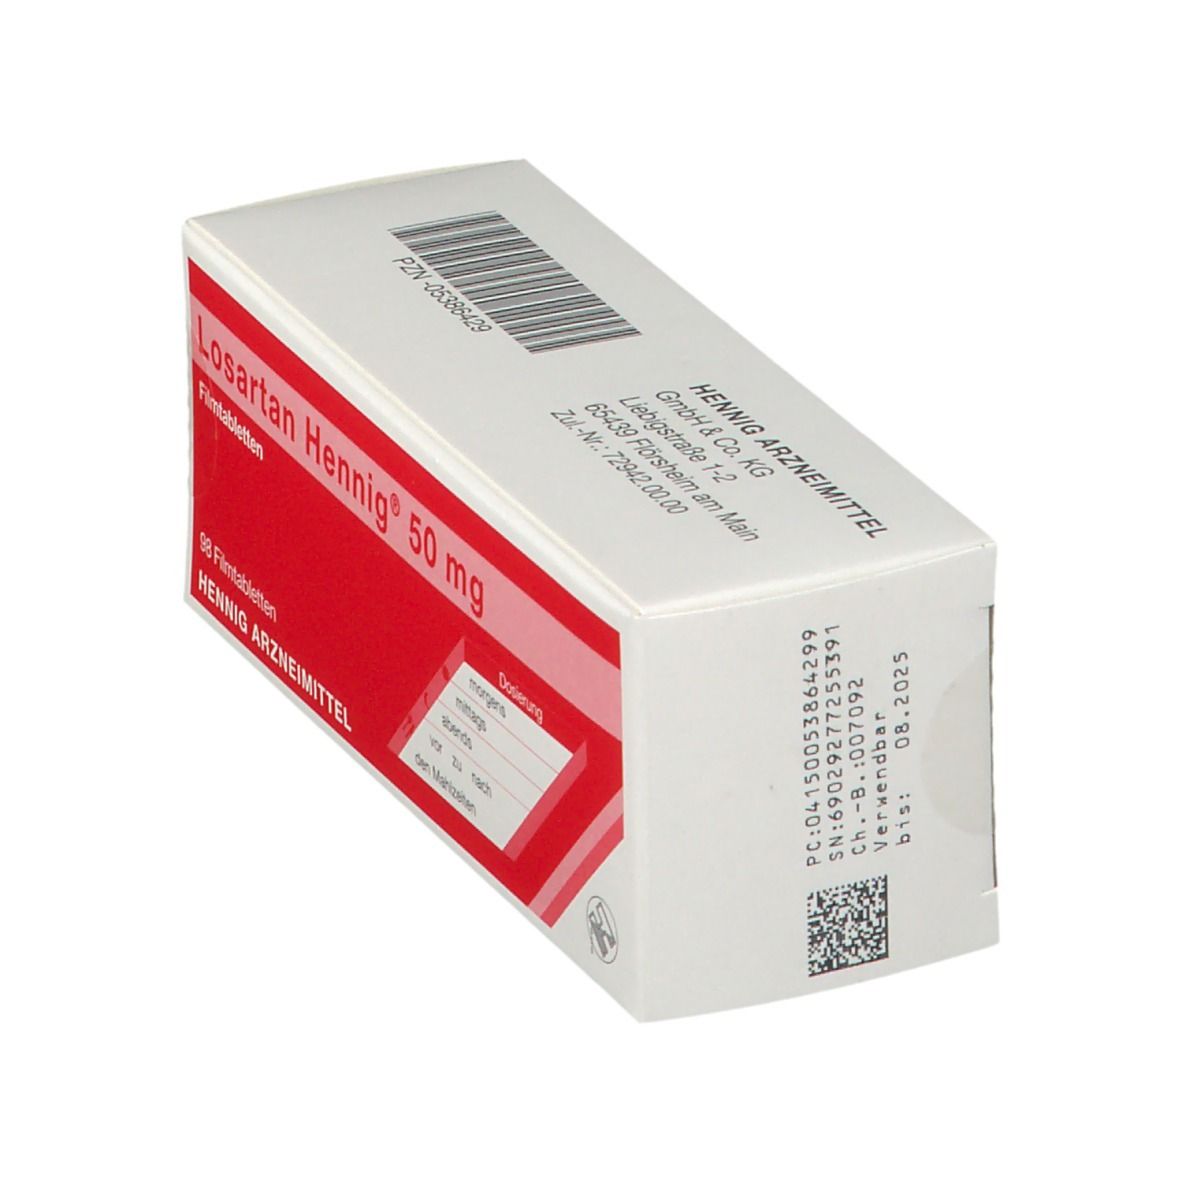 Losartan Hennig® 50 mg